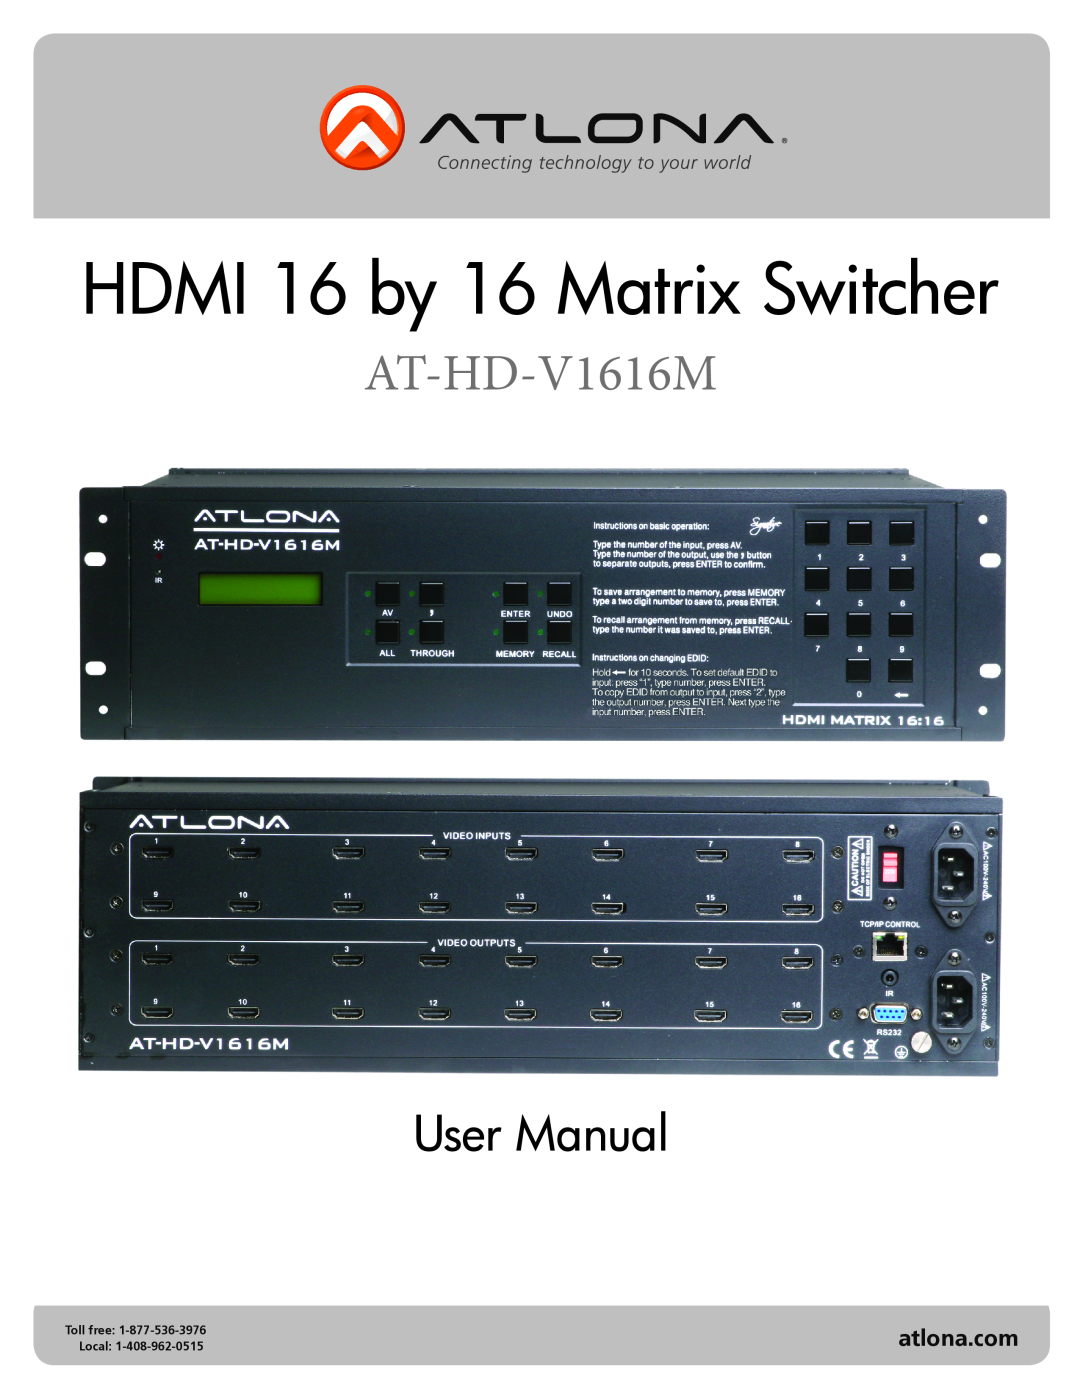 Atlona AT-HD-V1616M user manual HDMI 16 by 16 Matrix Switcher, atlona.com, Toll free, Local 